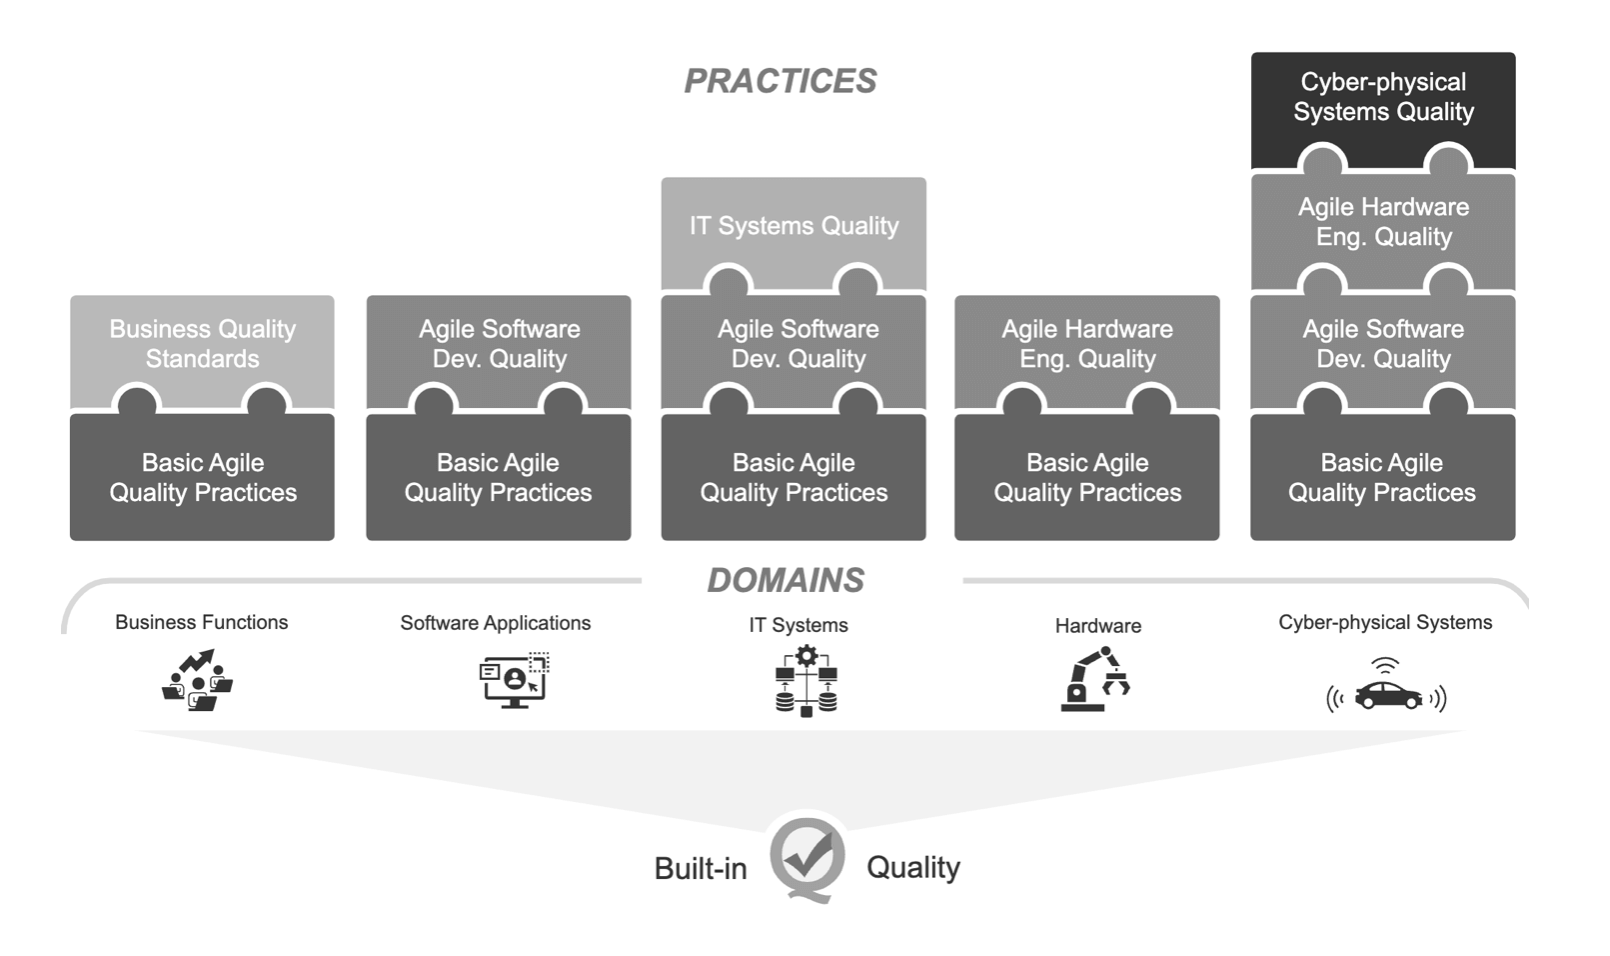 Basic agile quality practices